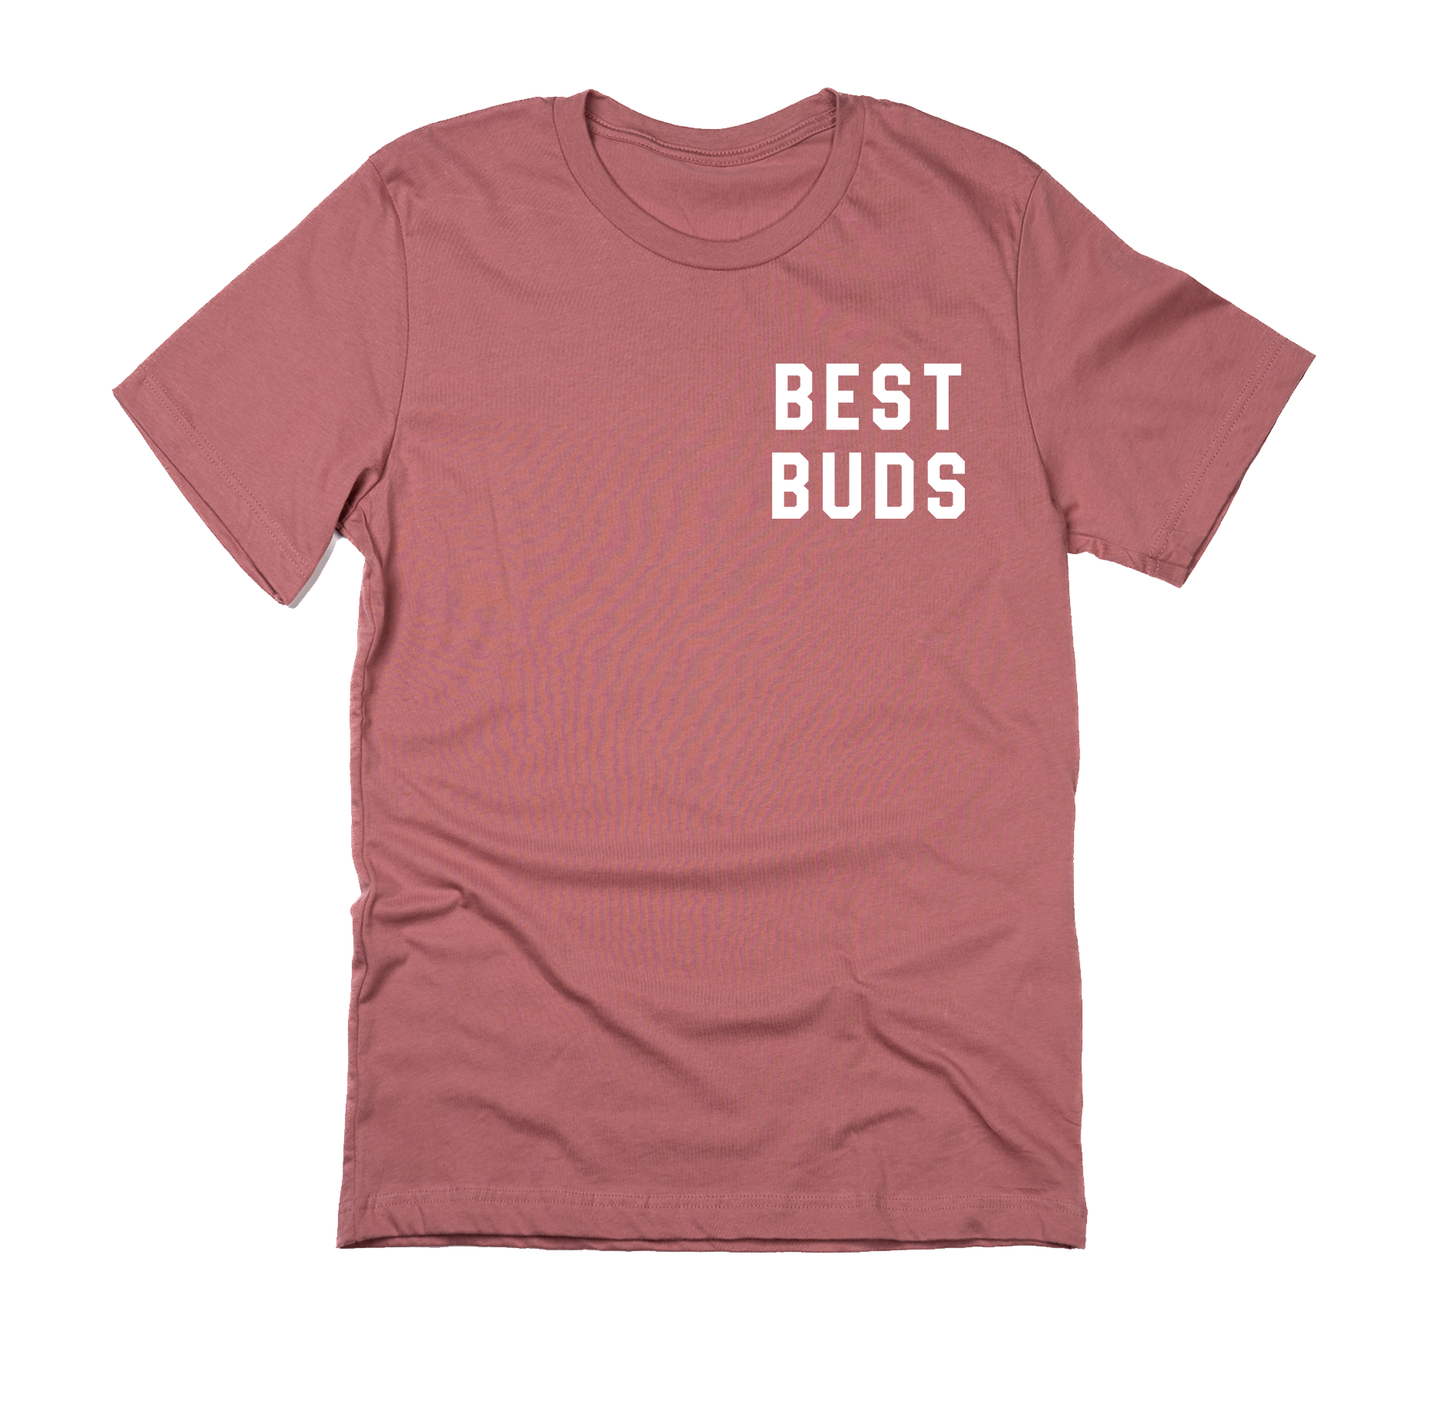 Best Buds (Pocket, White) - Tee (Mauve)